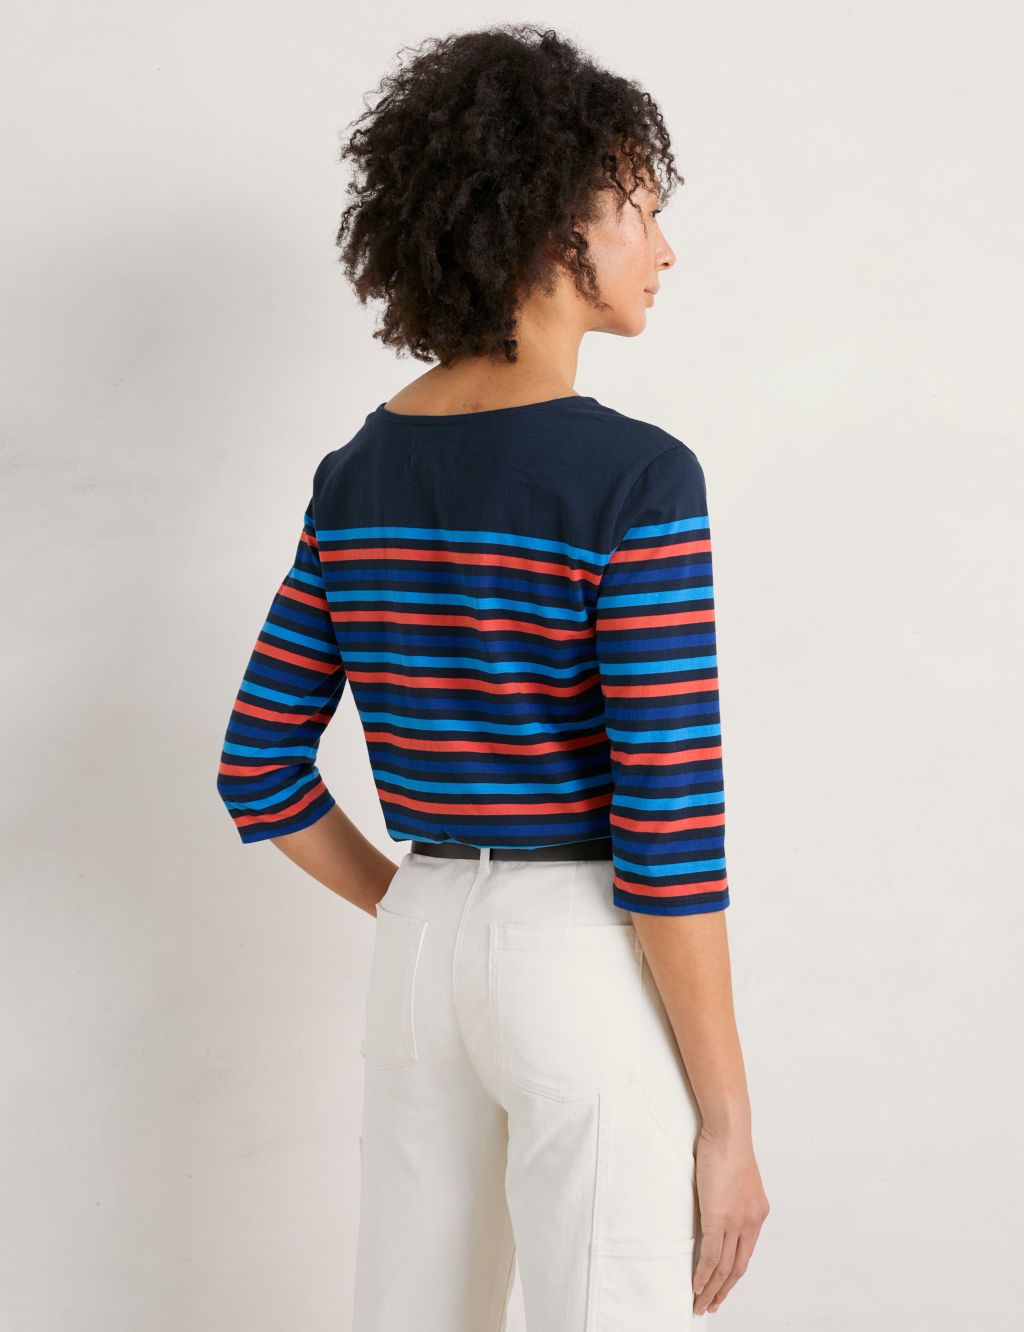 Organic Cotton Striped T-Shirt image 3